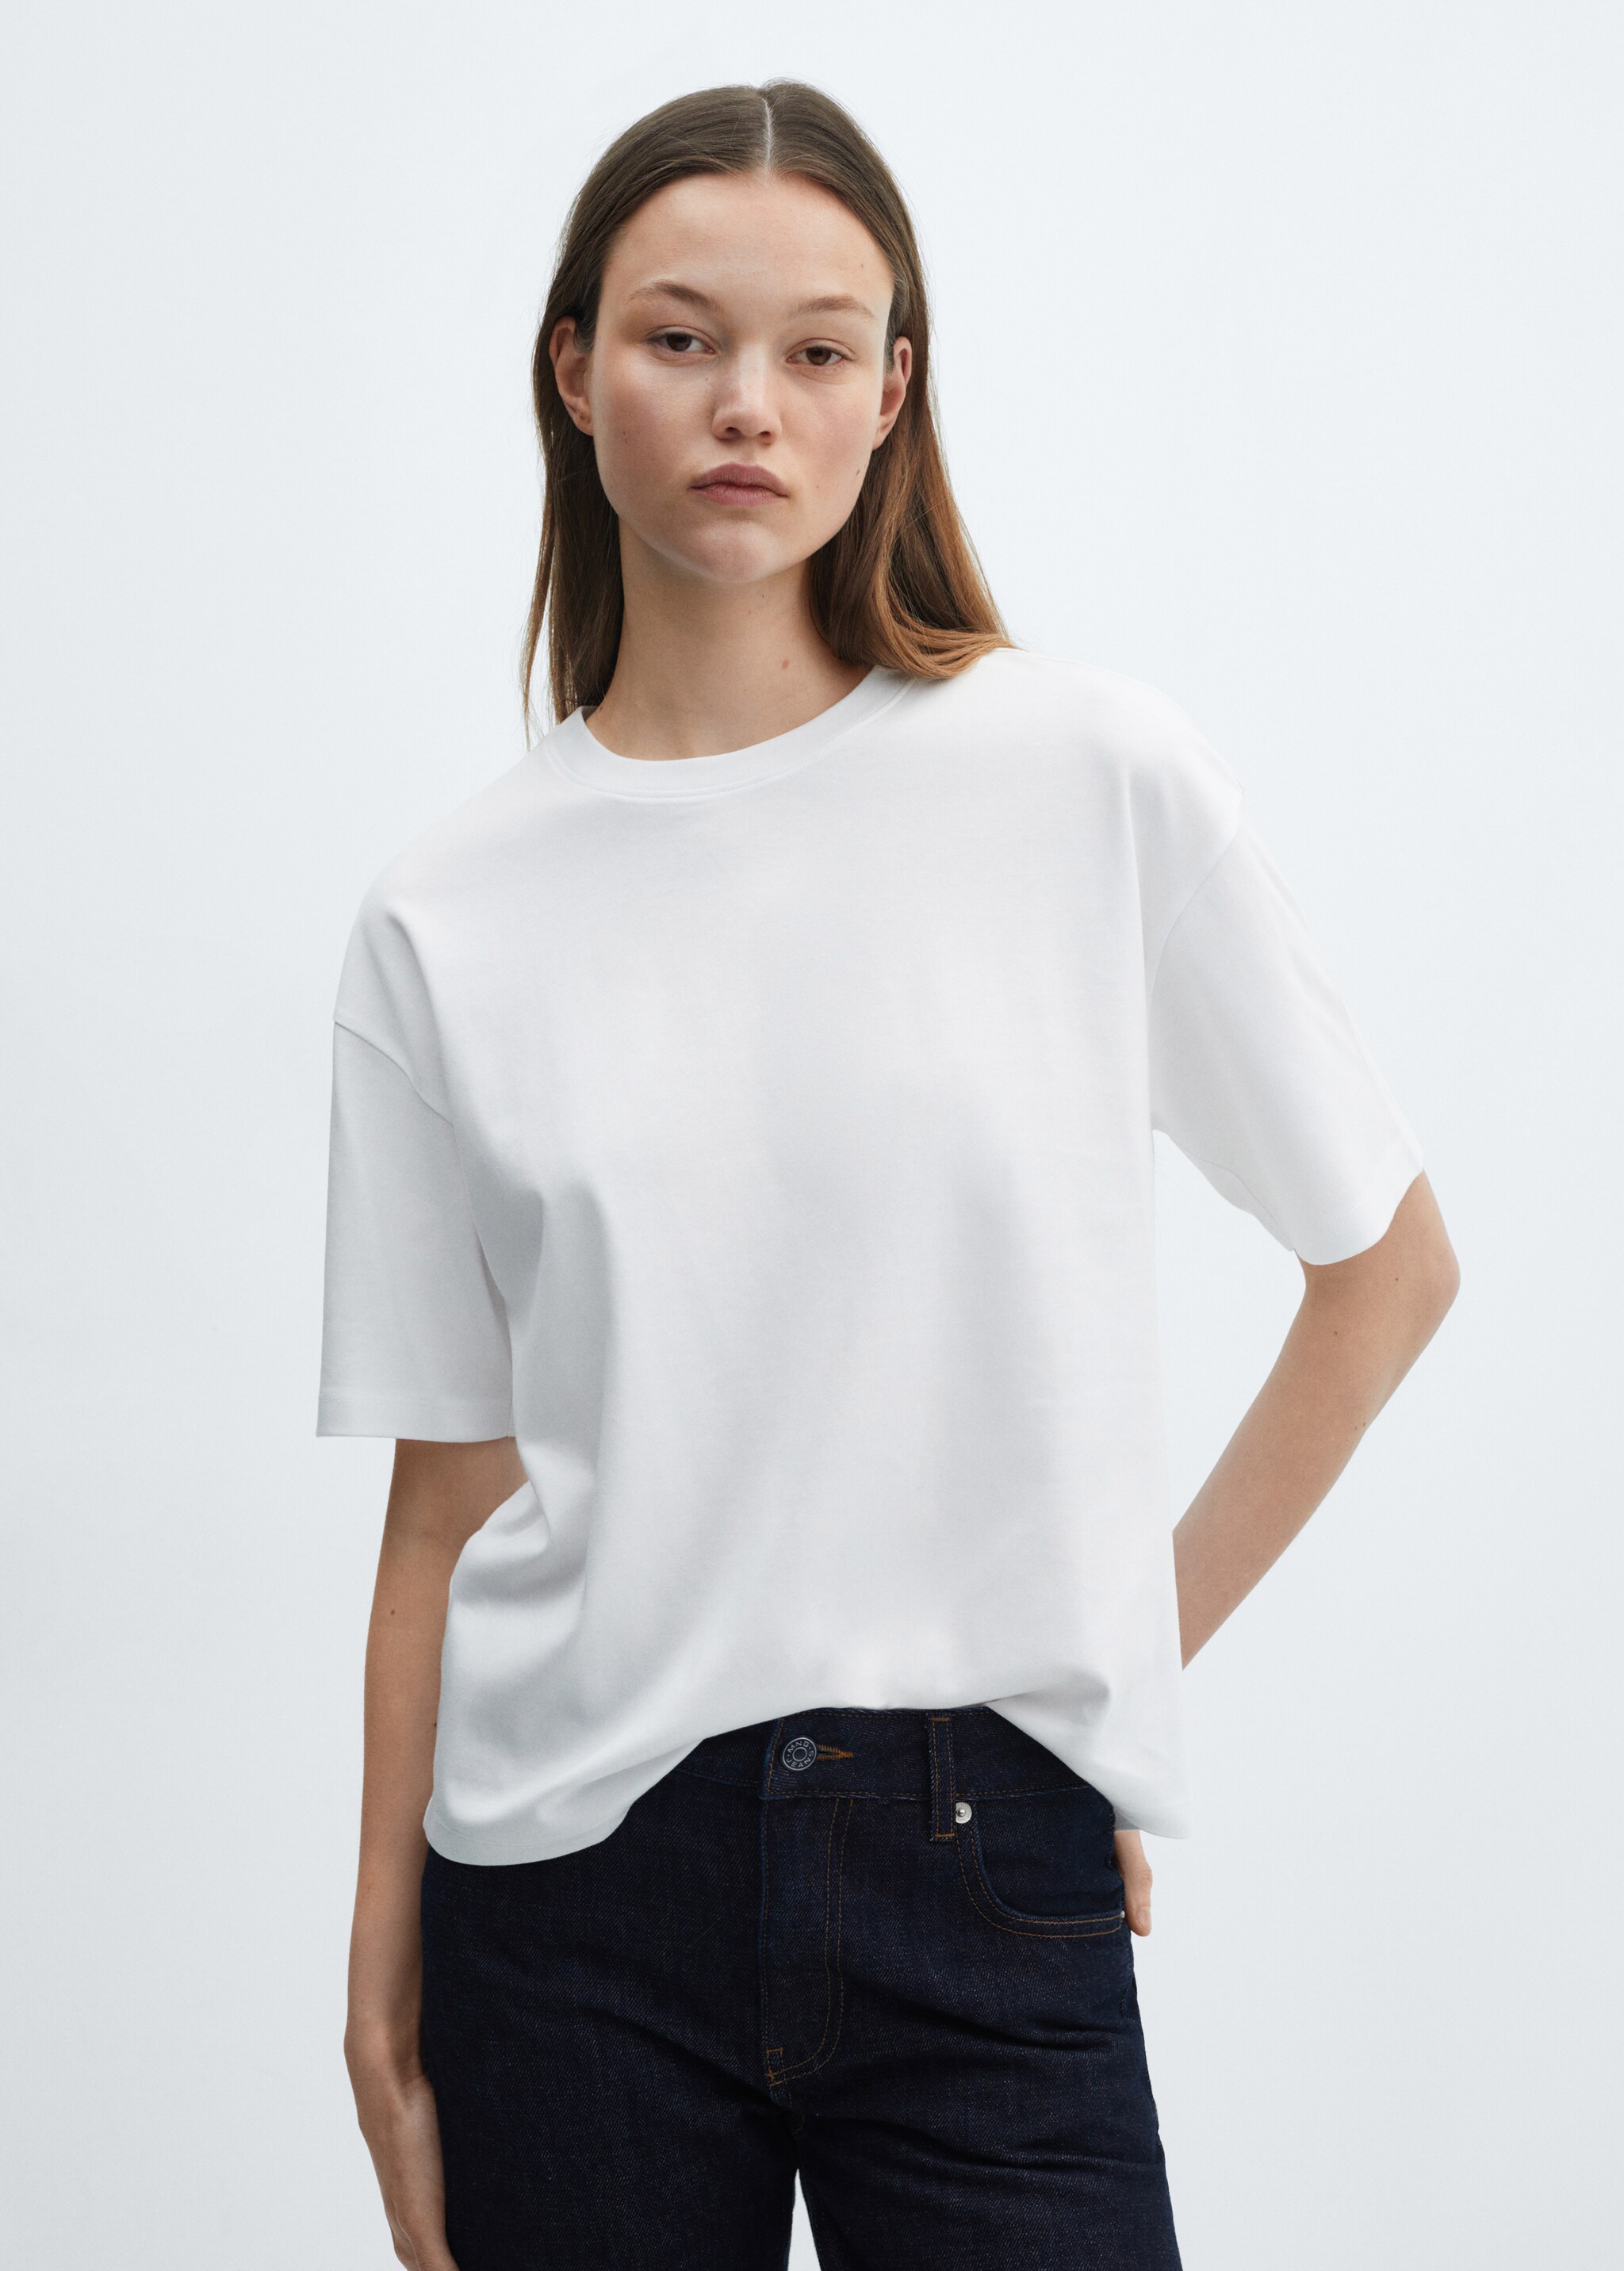 Oversize cotton T-shirt - Medium plane